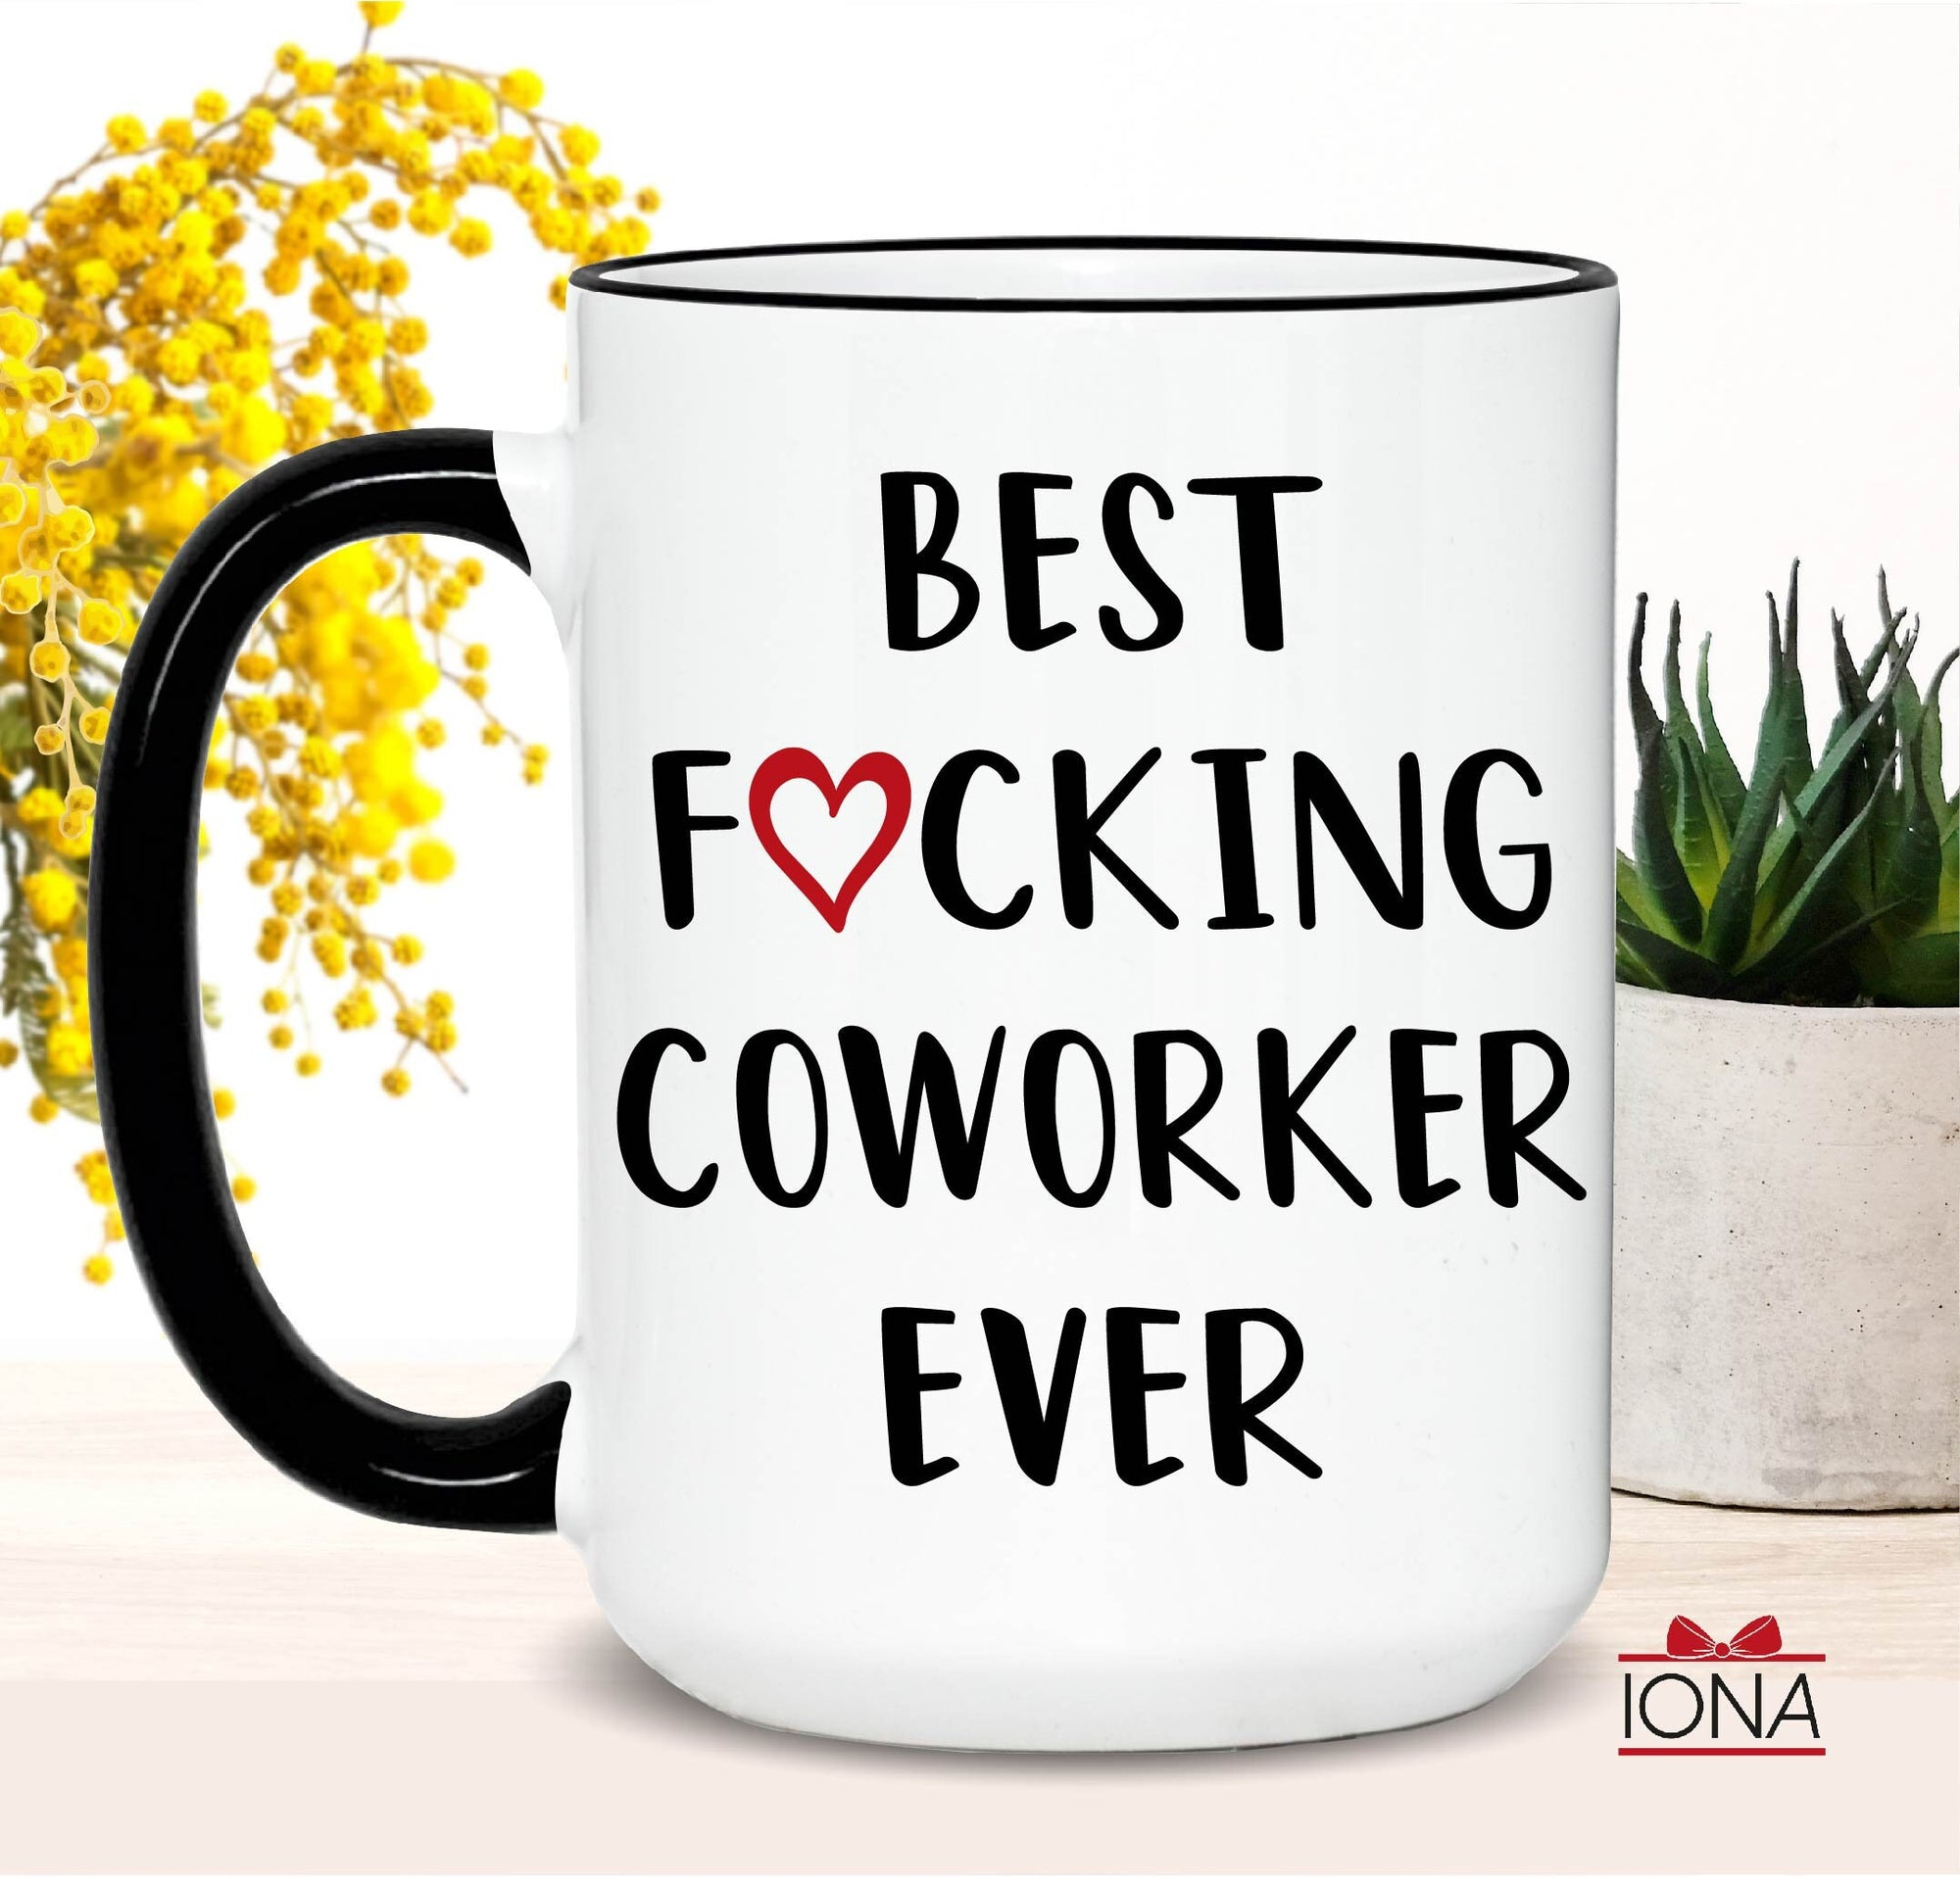 Personalized Funny Coworker Gift, Best Coworker Ever Mug, Coworker Coffee Mug, Best Fucking Coworker Ever Mug,Christmas Gift, Co-worker Gift